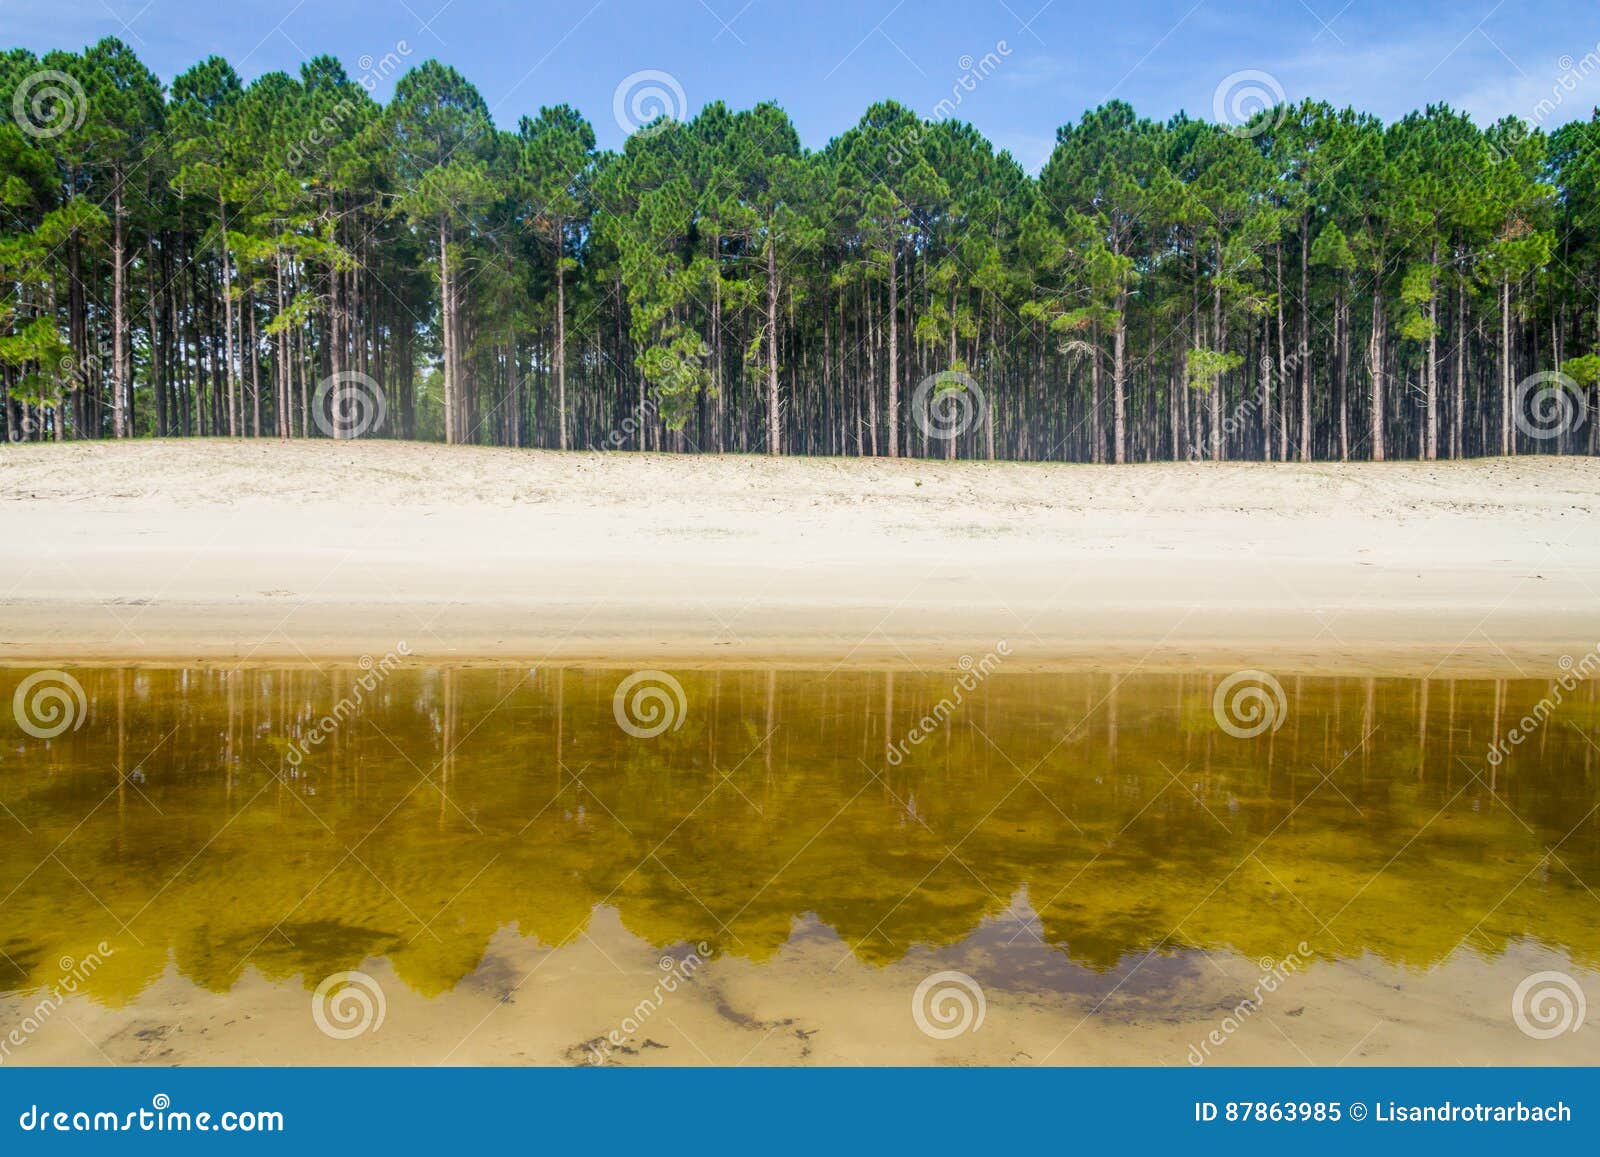 pinus elliottii forest at lagoa dos patos lake